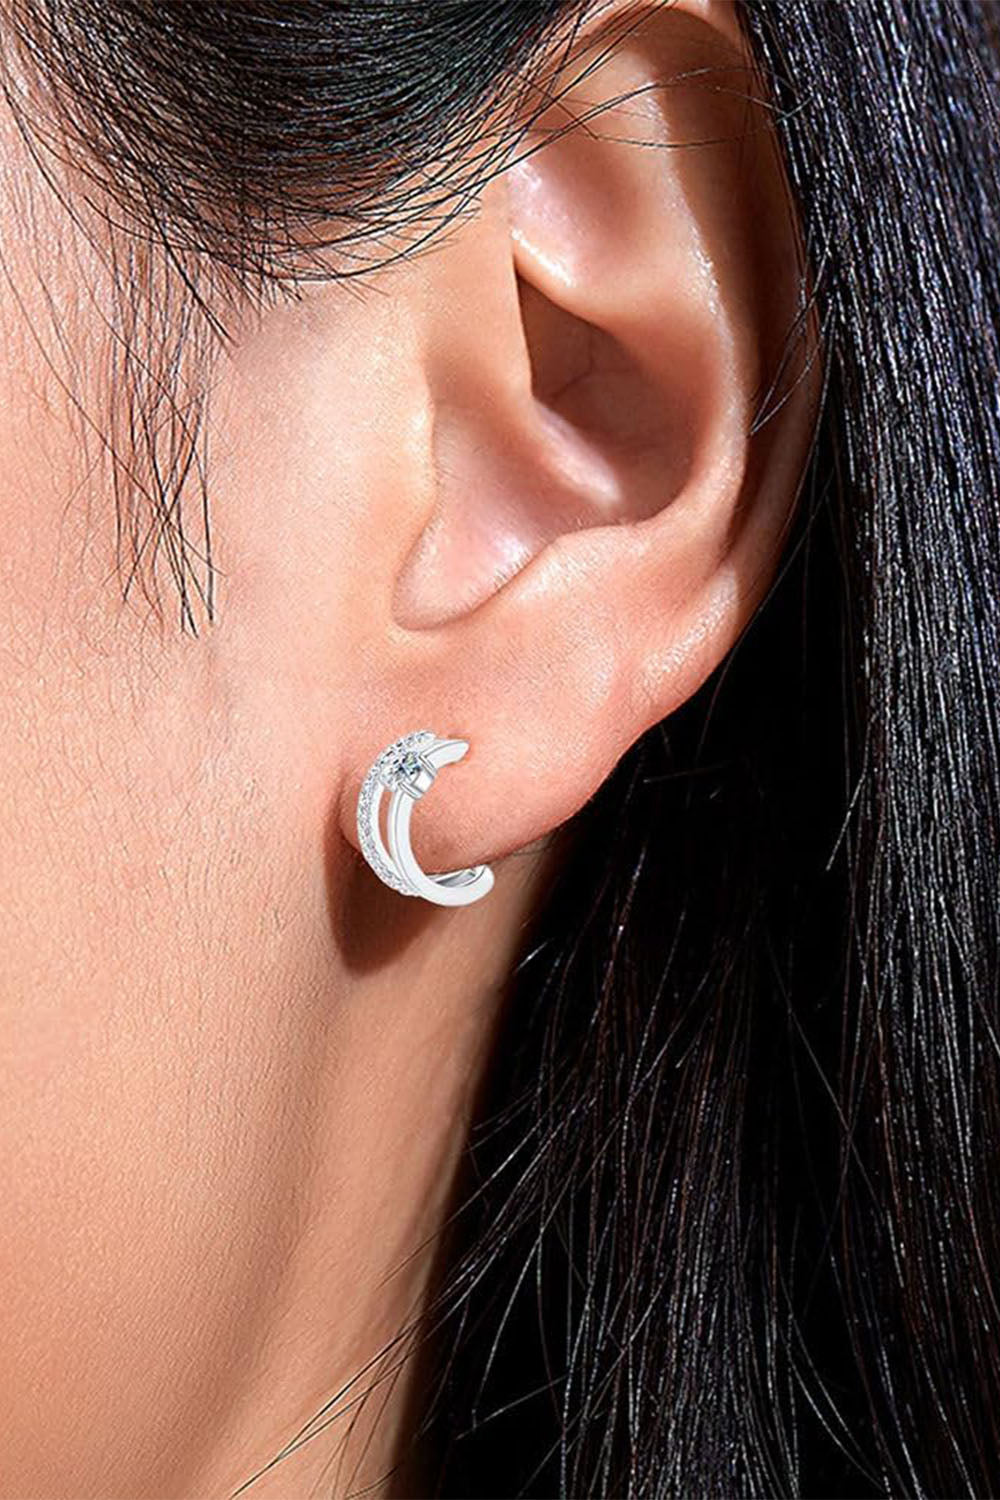 0.6 Carat Moissanite Diamond Open Hoop Earrings in 18K Gold Plated 925 Sterling Silver D Color VVS1.